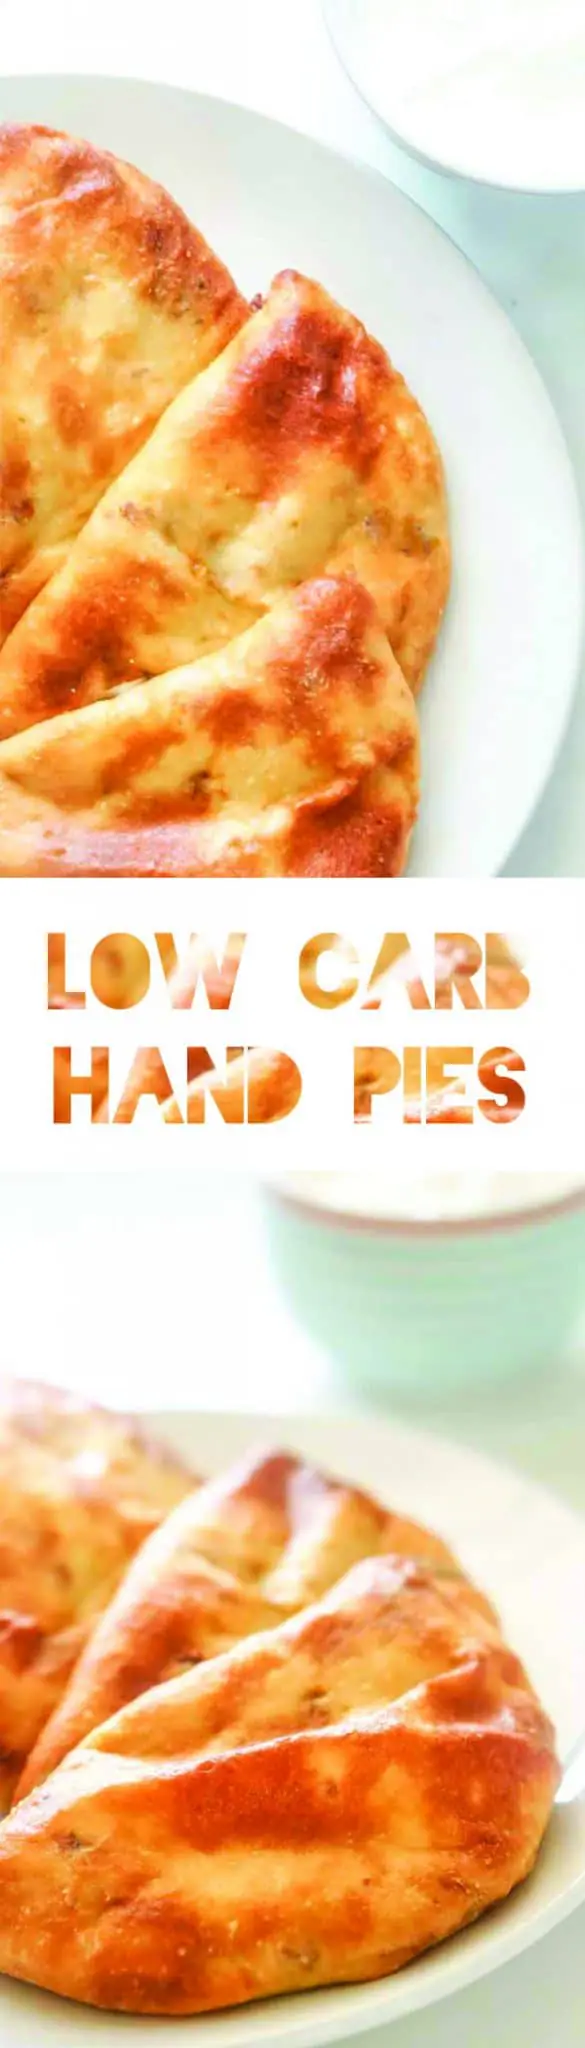 Low Carb Hand Pies Recipes | Keto Recipes | Fathead Pizza | Atkins